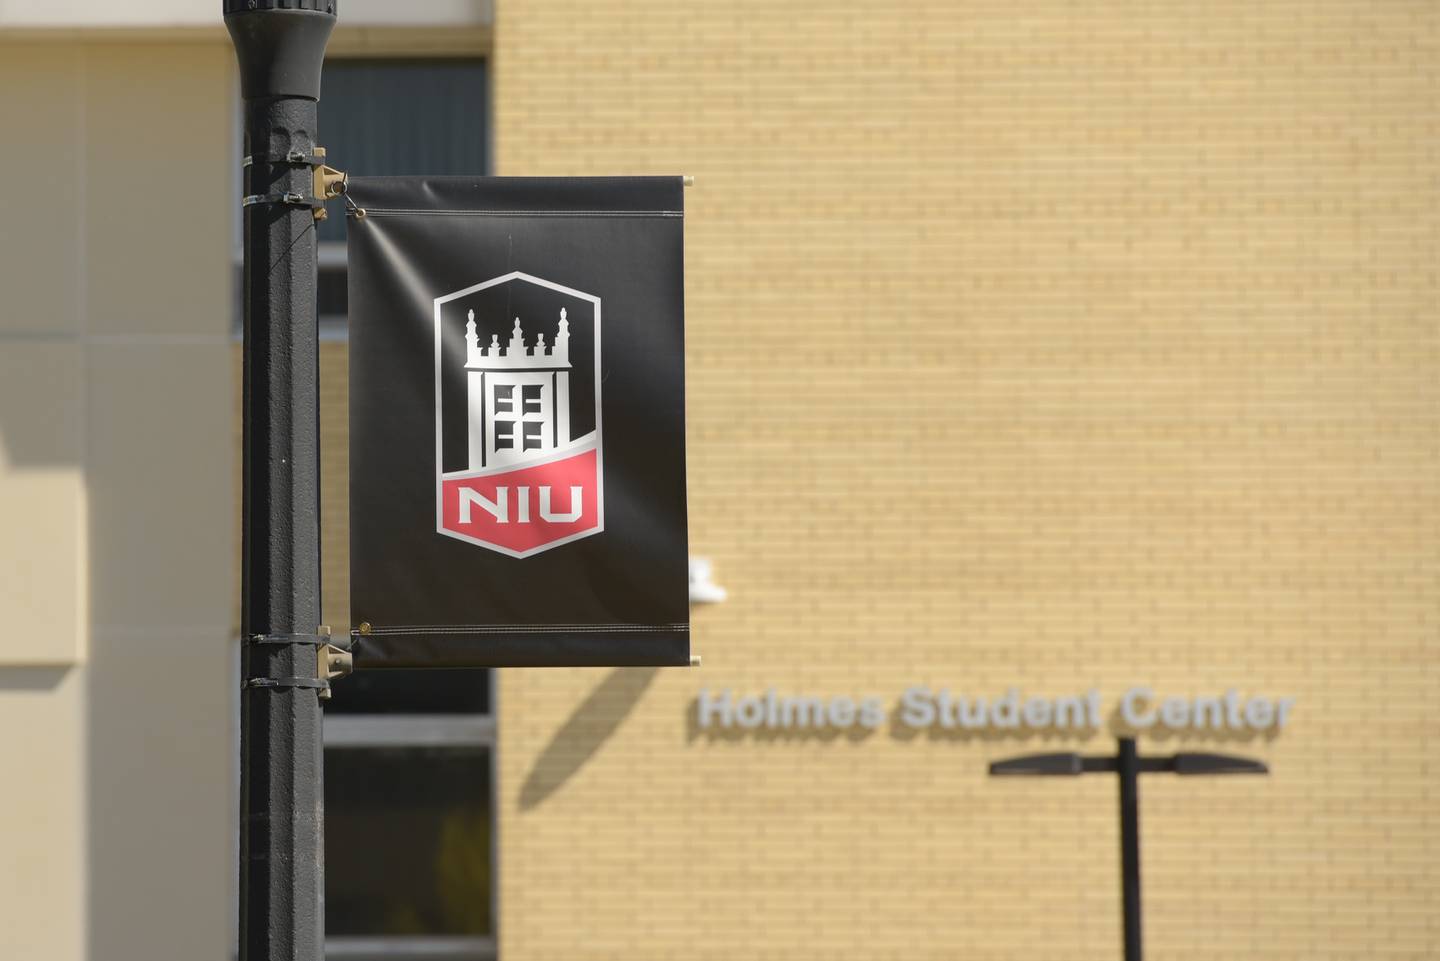 Northern Illinois University, NIU, light pole banners in DeKalb, IL on Thursday, May 13, 2021.